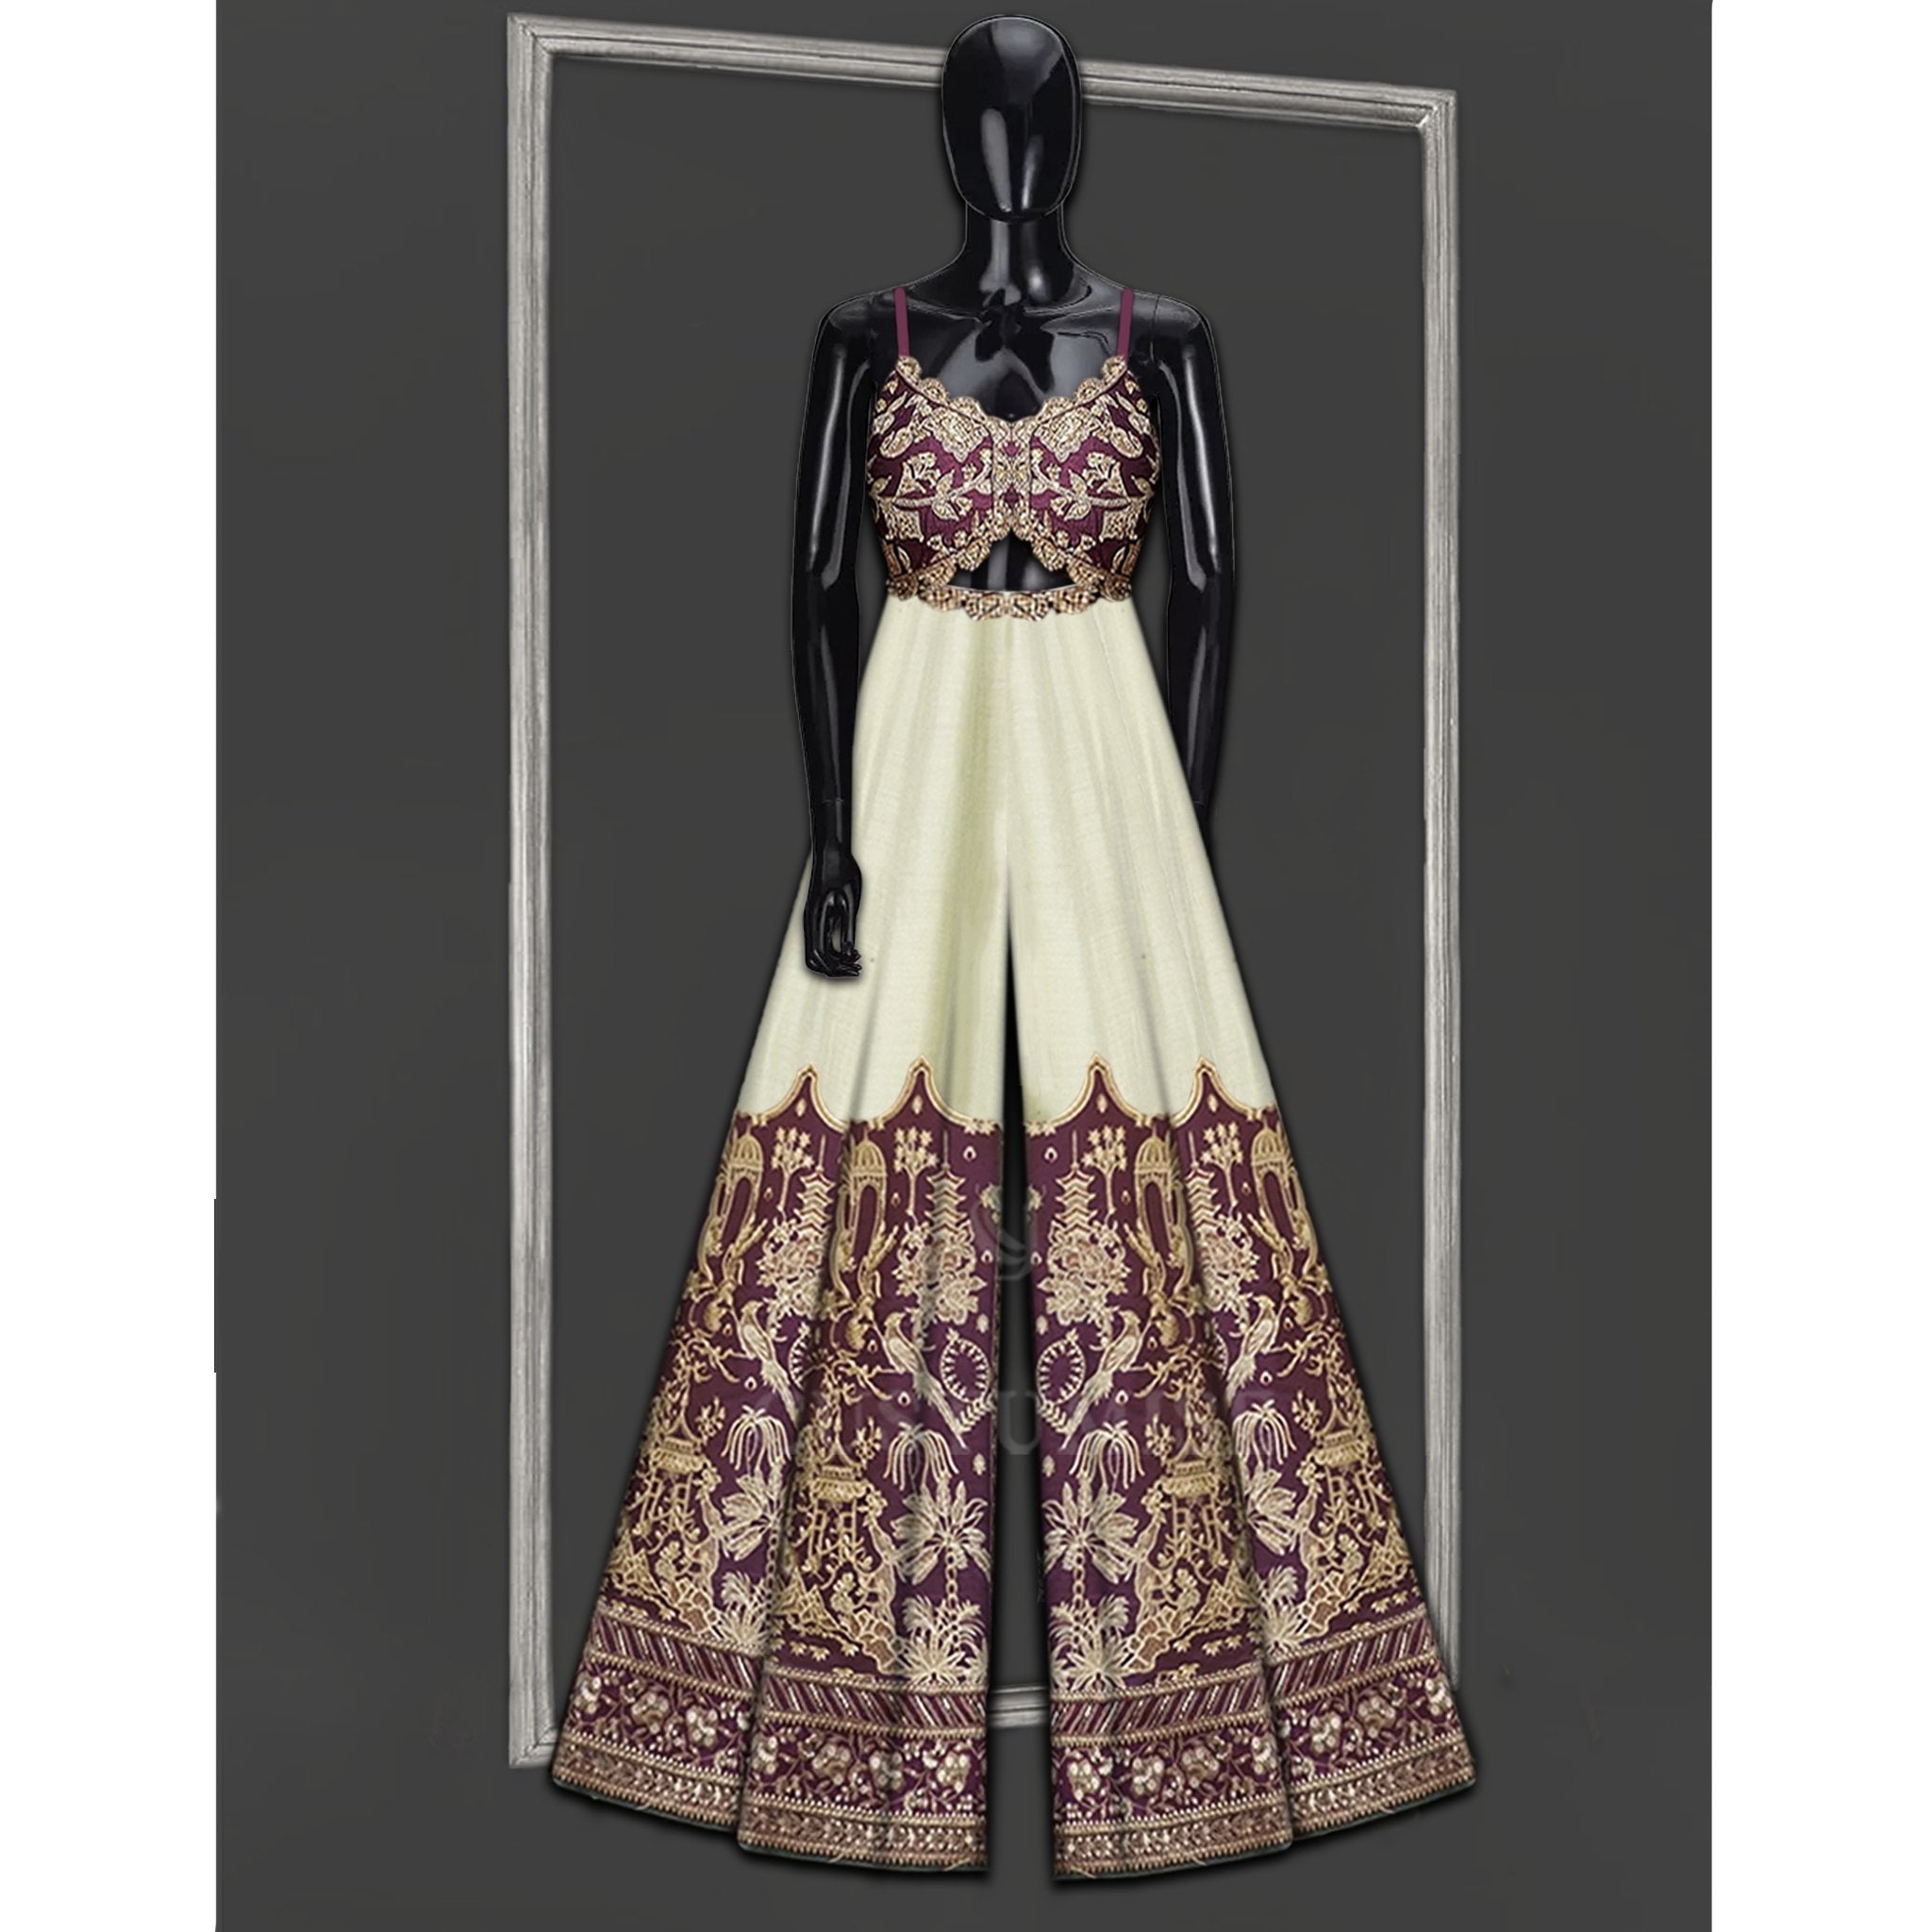 Ivory & Aubergine Jumpsuit - Indian Designer Bridal Wedding Outfit